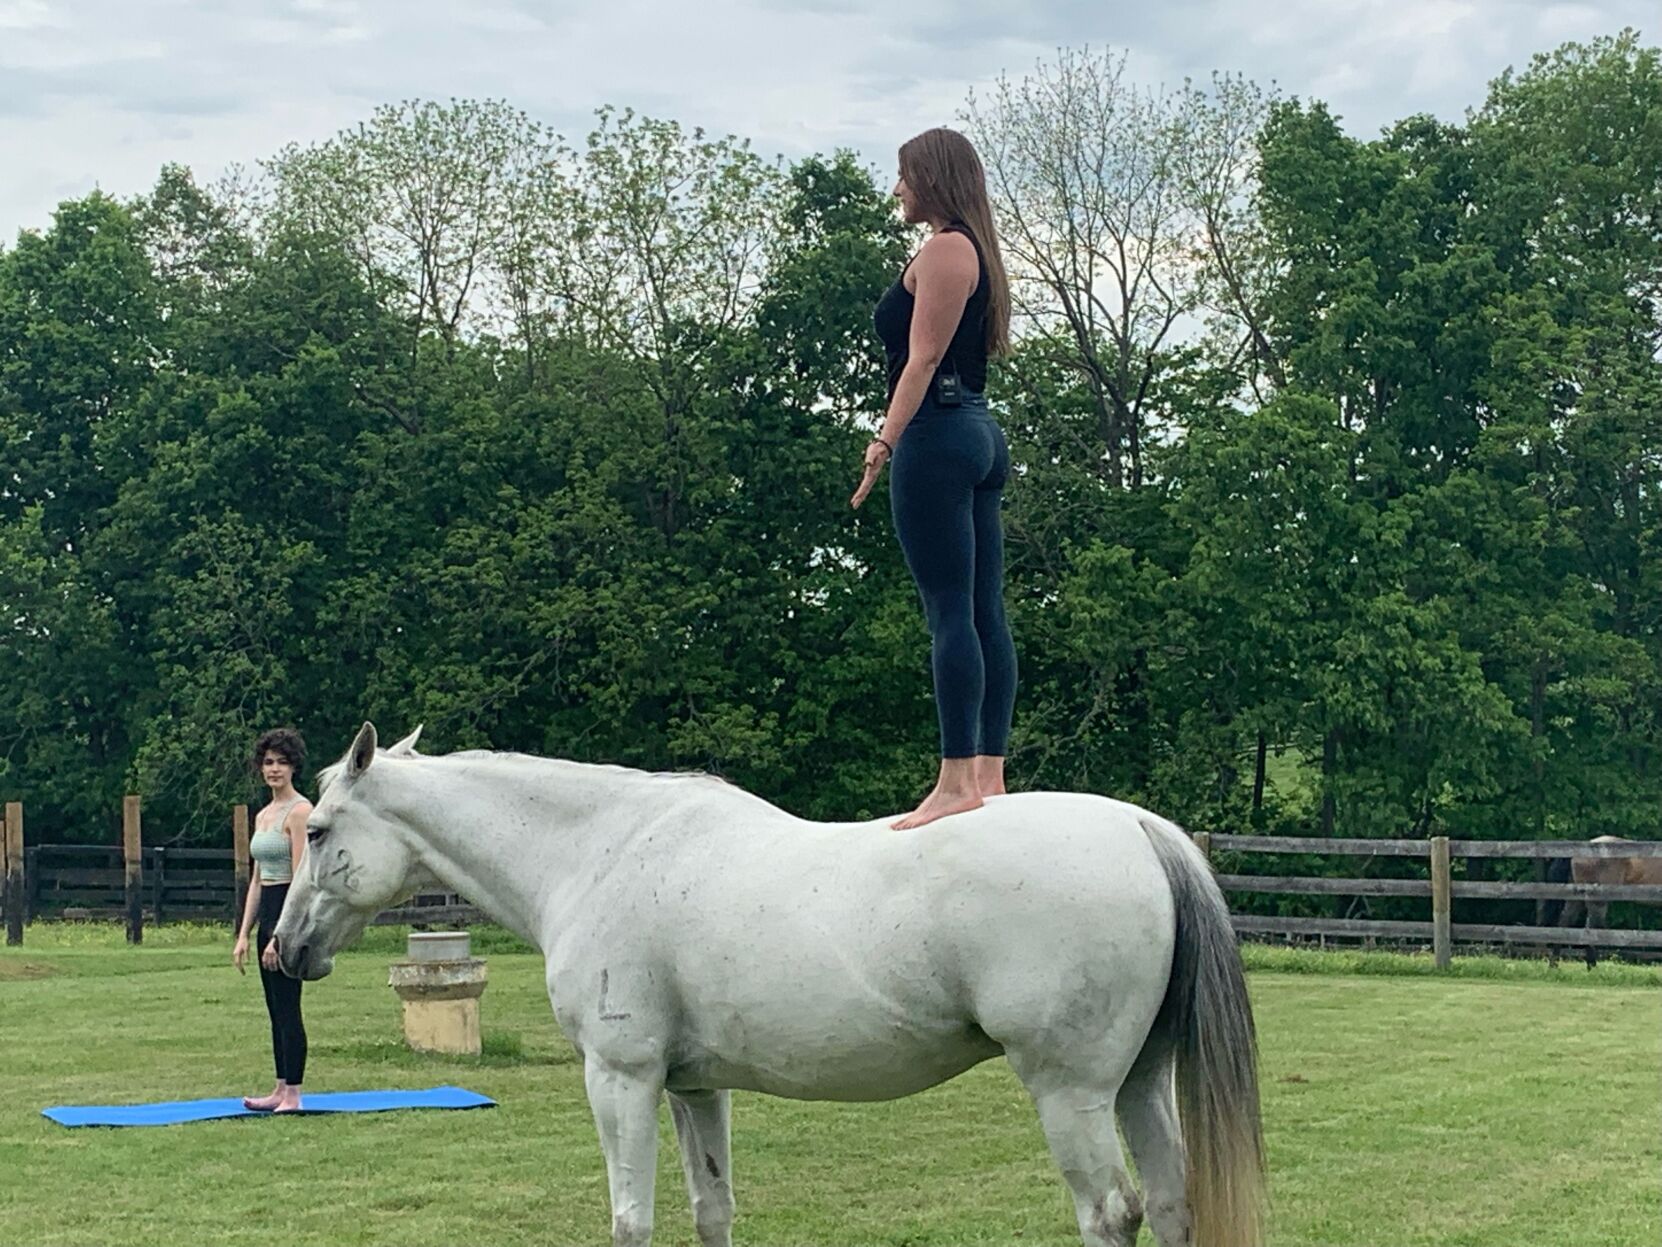 Ommmmmm ... neighhhhhh ... You can do yoga on a horse in LaPorte